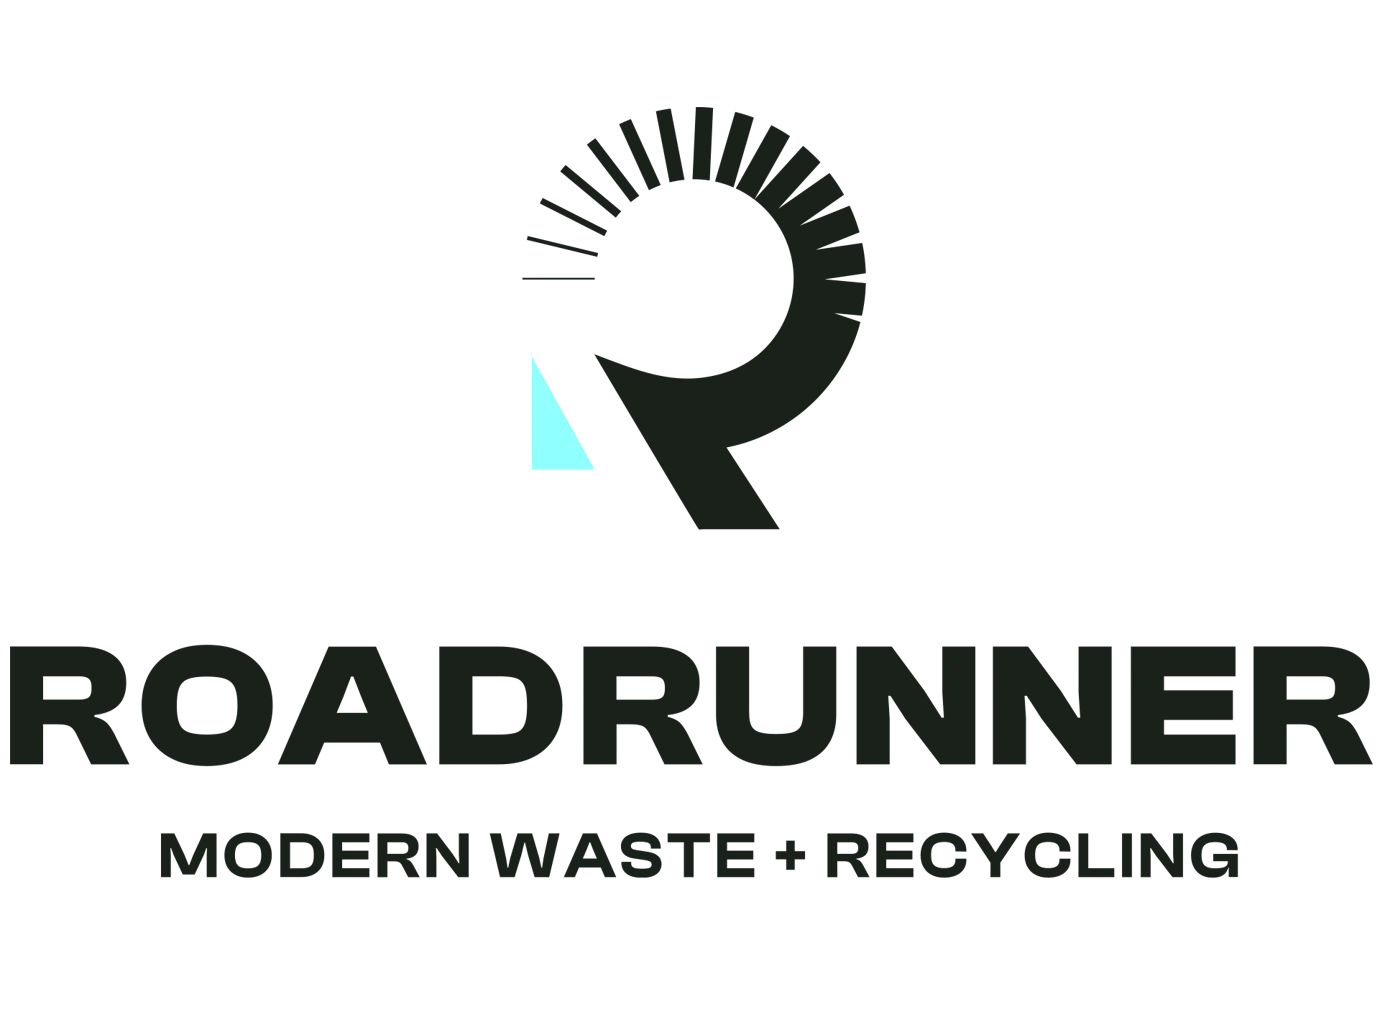 RoadRunner Recycling